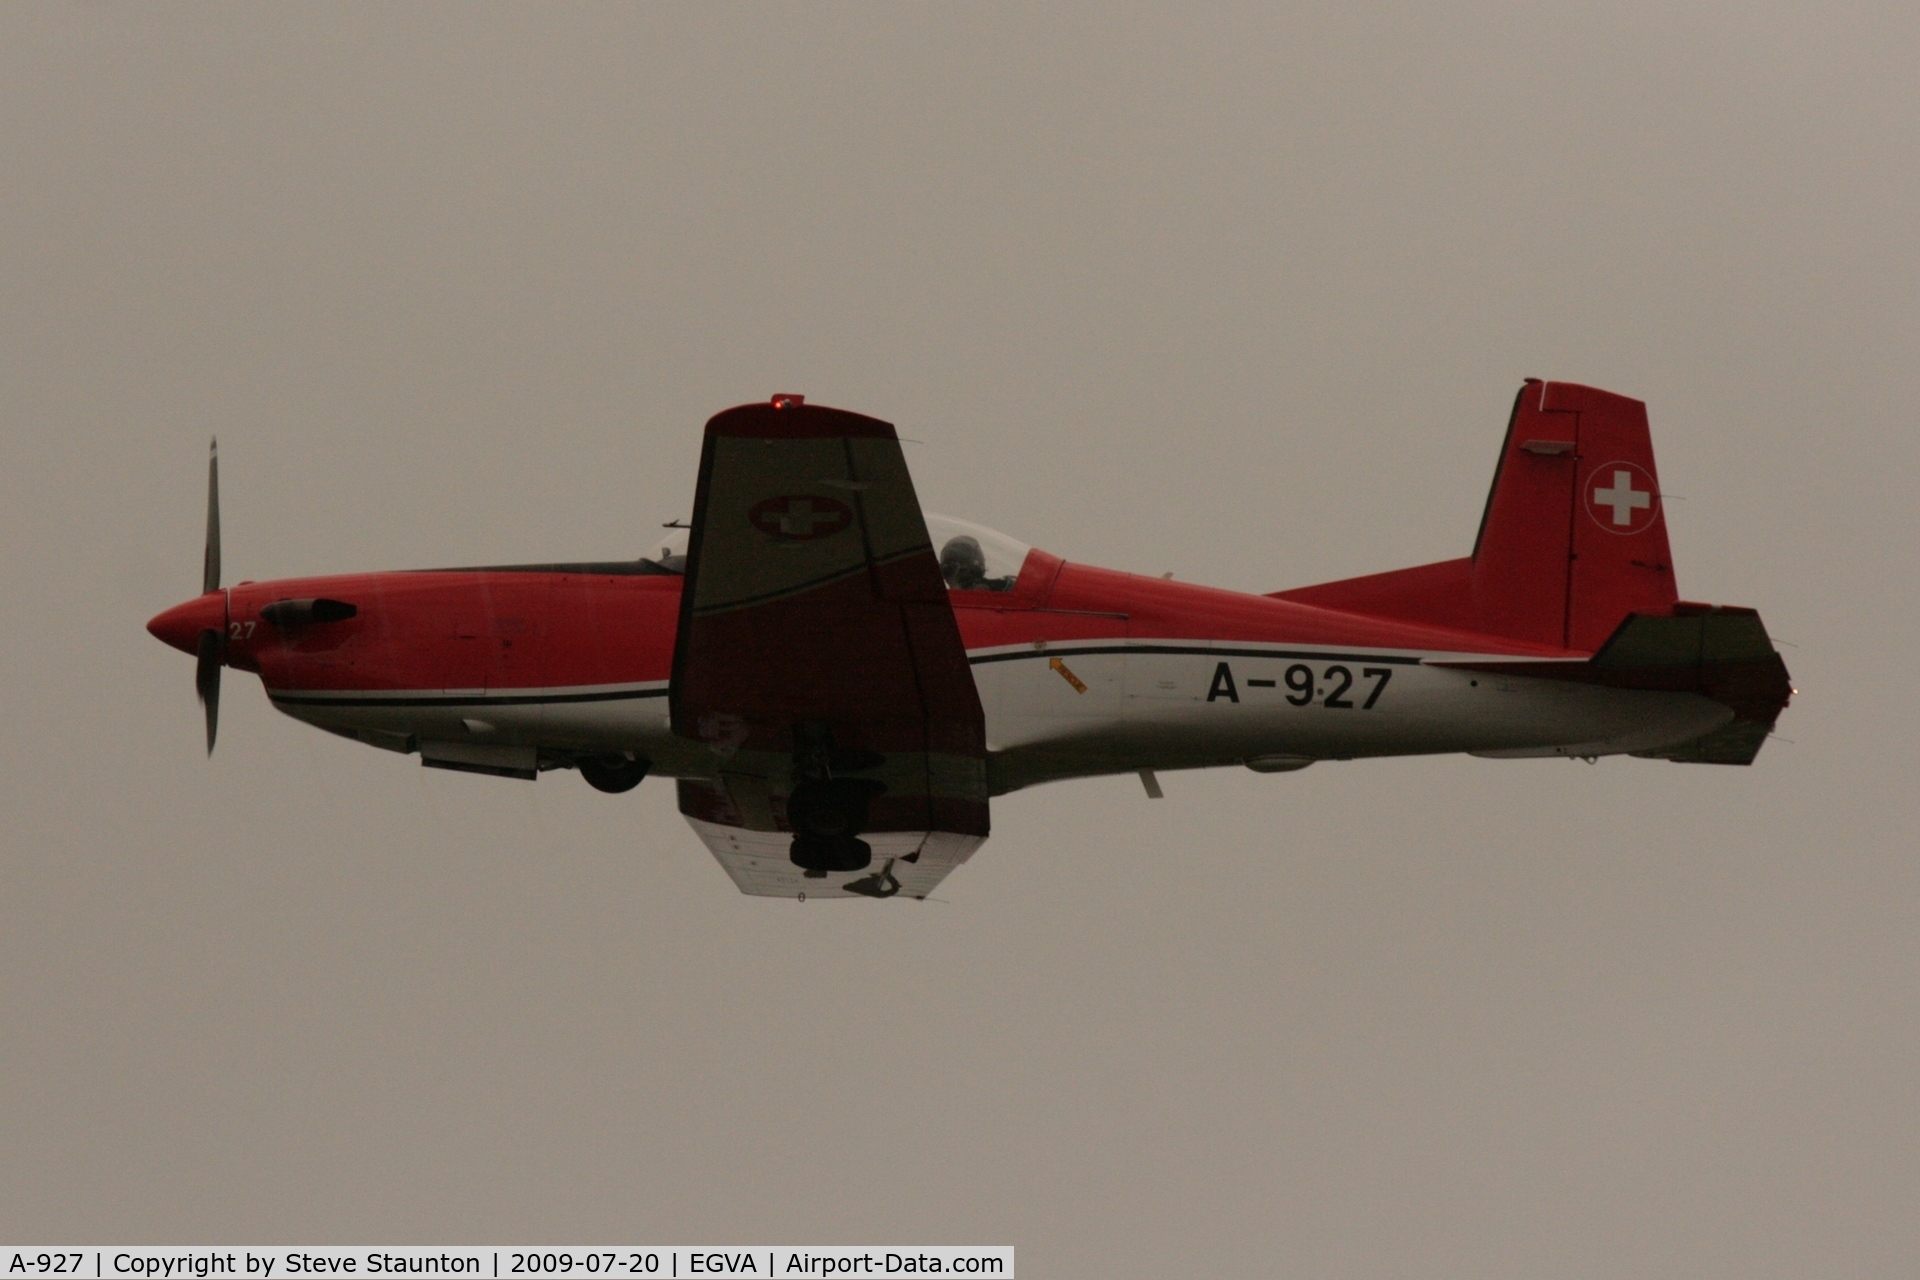 A-927, 1983 Pilatus PC-7 Turbo Trainer C/N 335, Taken at the Royal International Air Tattoo 2009